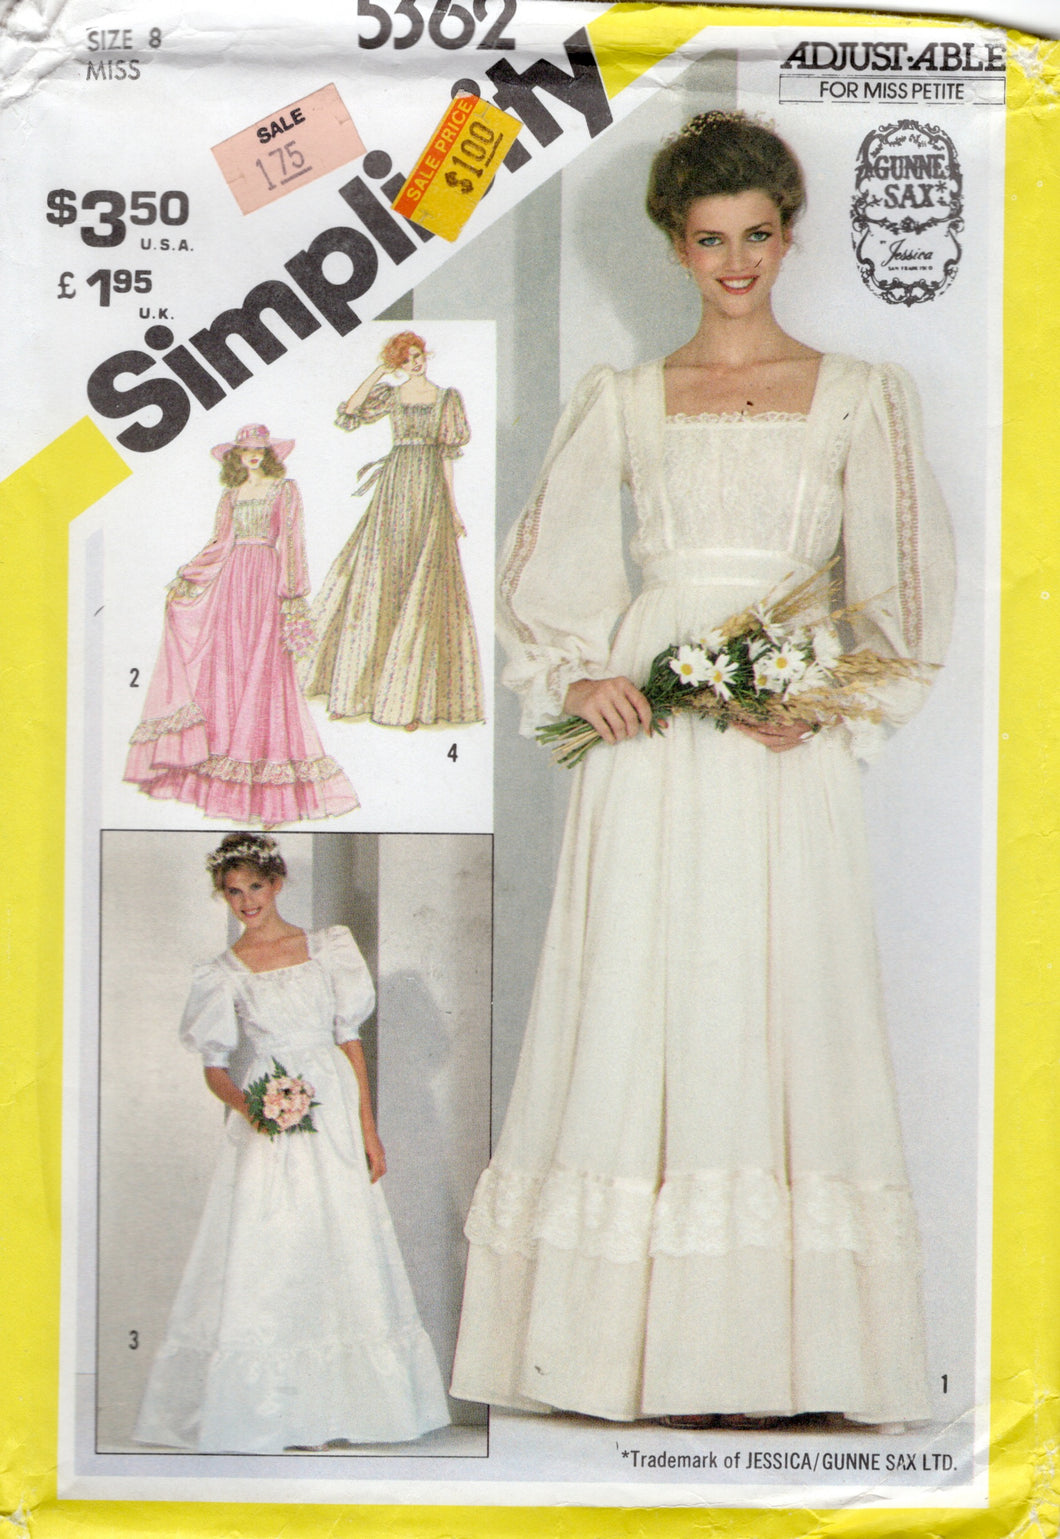 1980's Simplicity GUNNE SAX Prairie Dress or Wedding Dress with Square Neckline - Bust 31.5